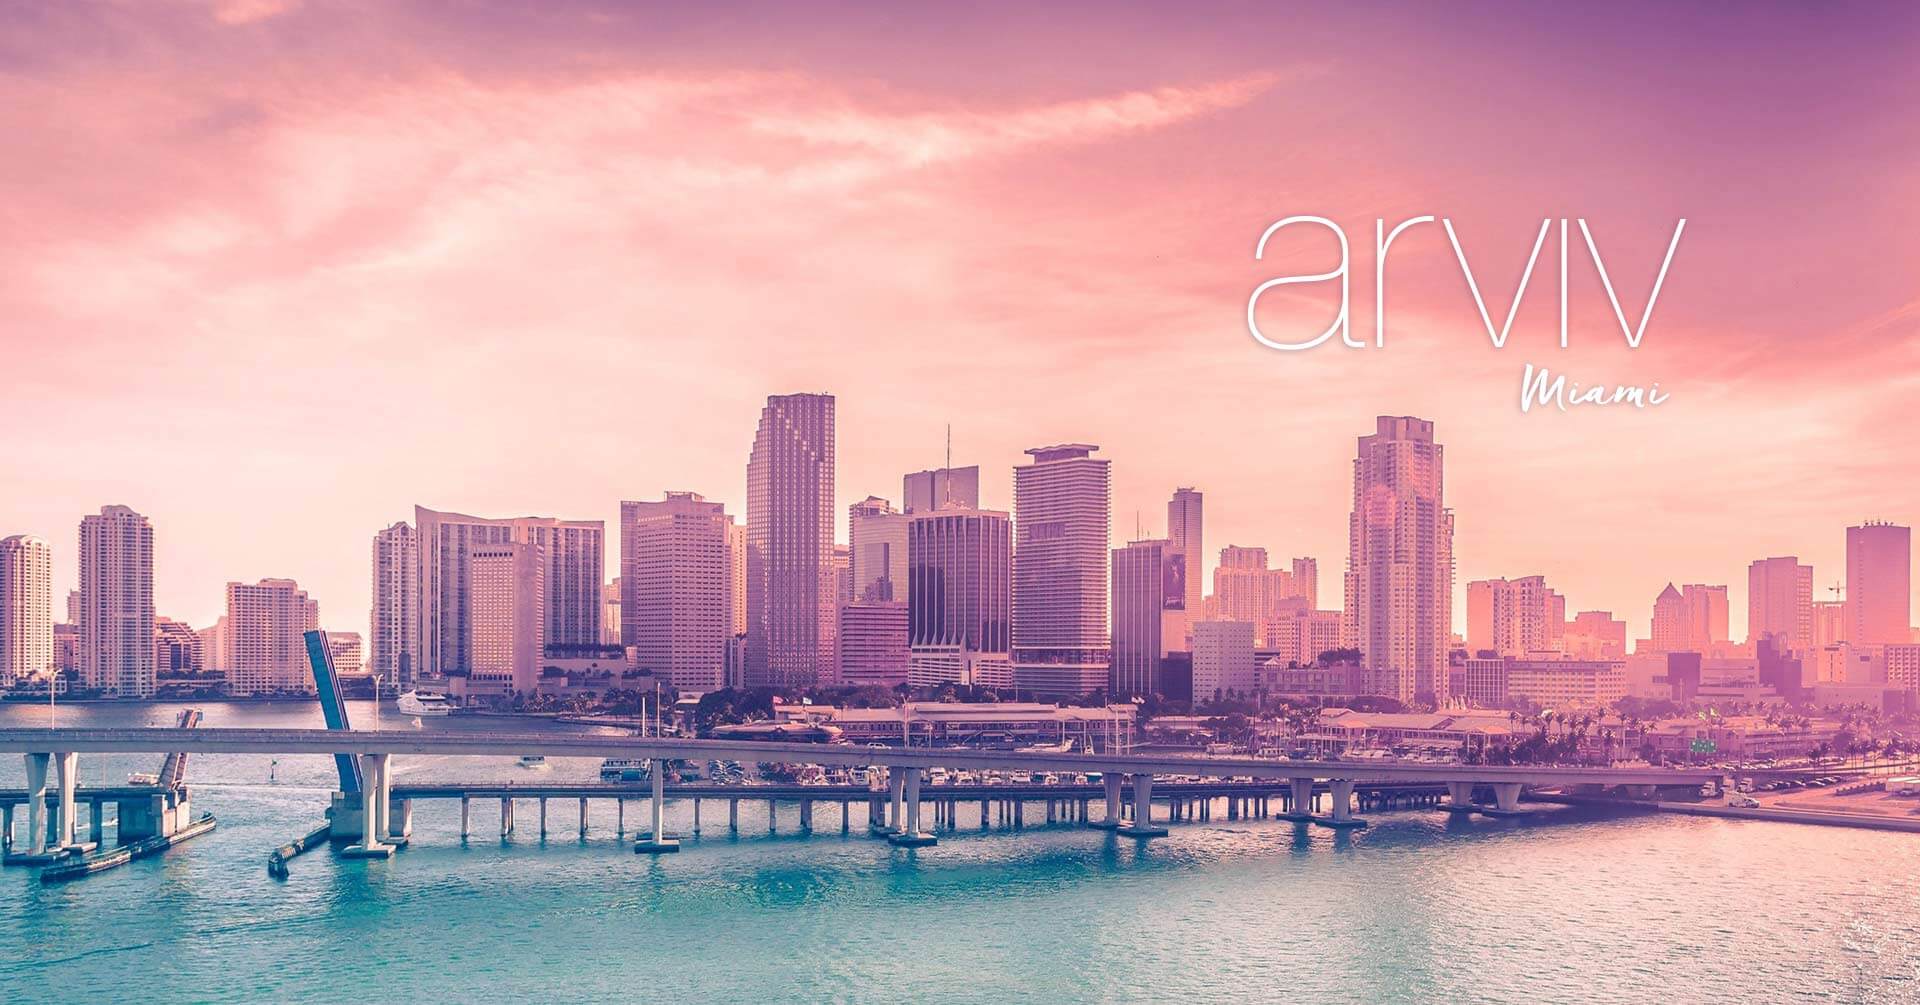 Arviv Medical Aesthetics Office in Miami